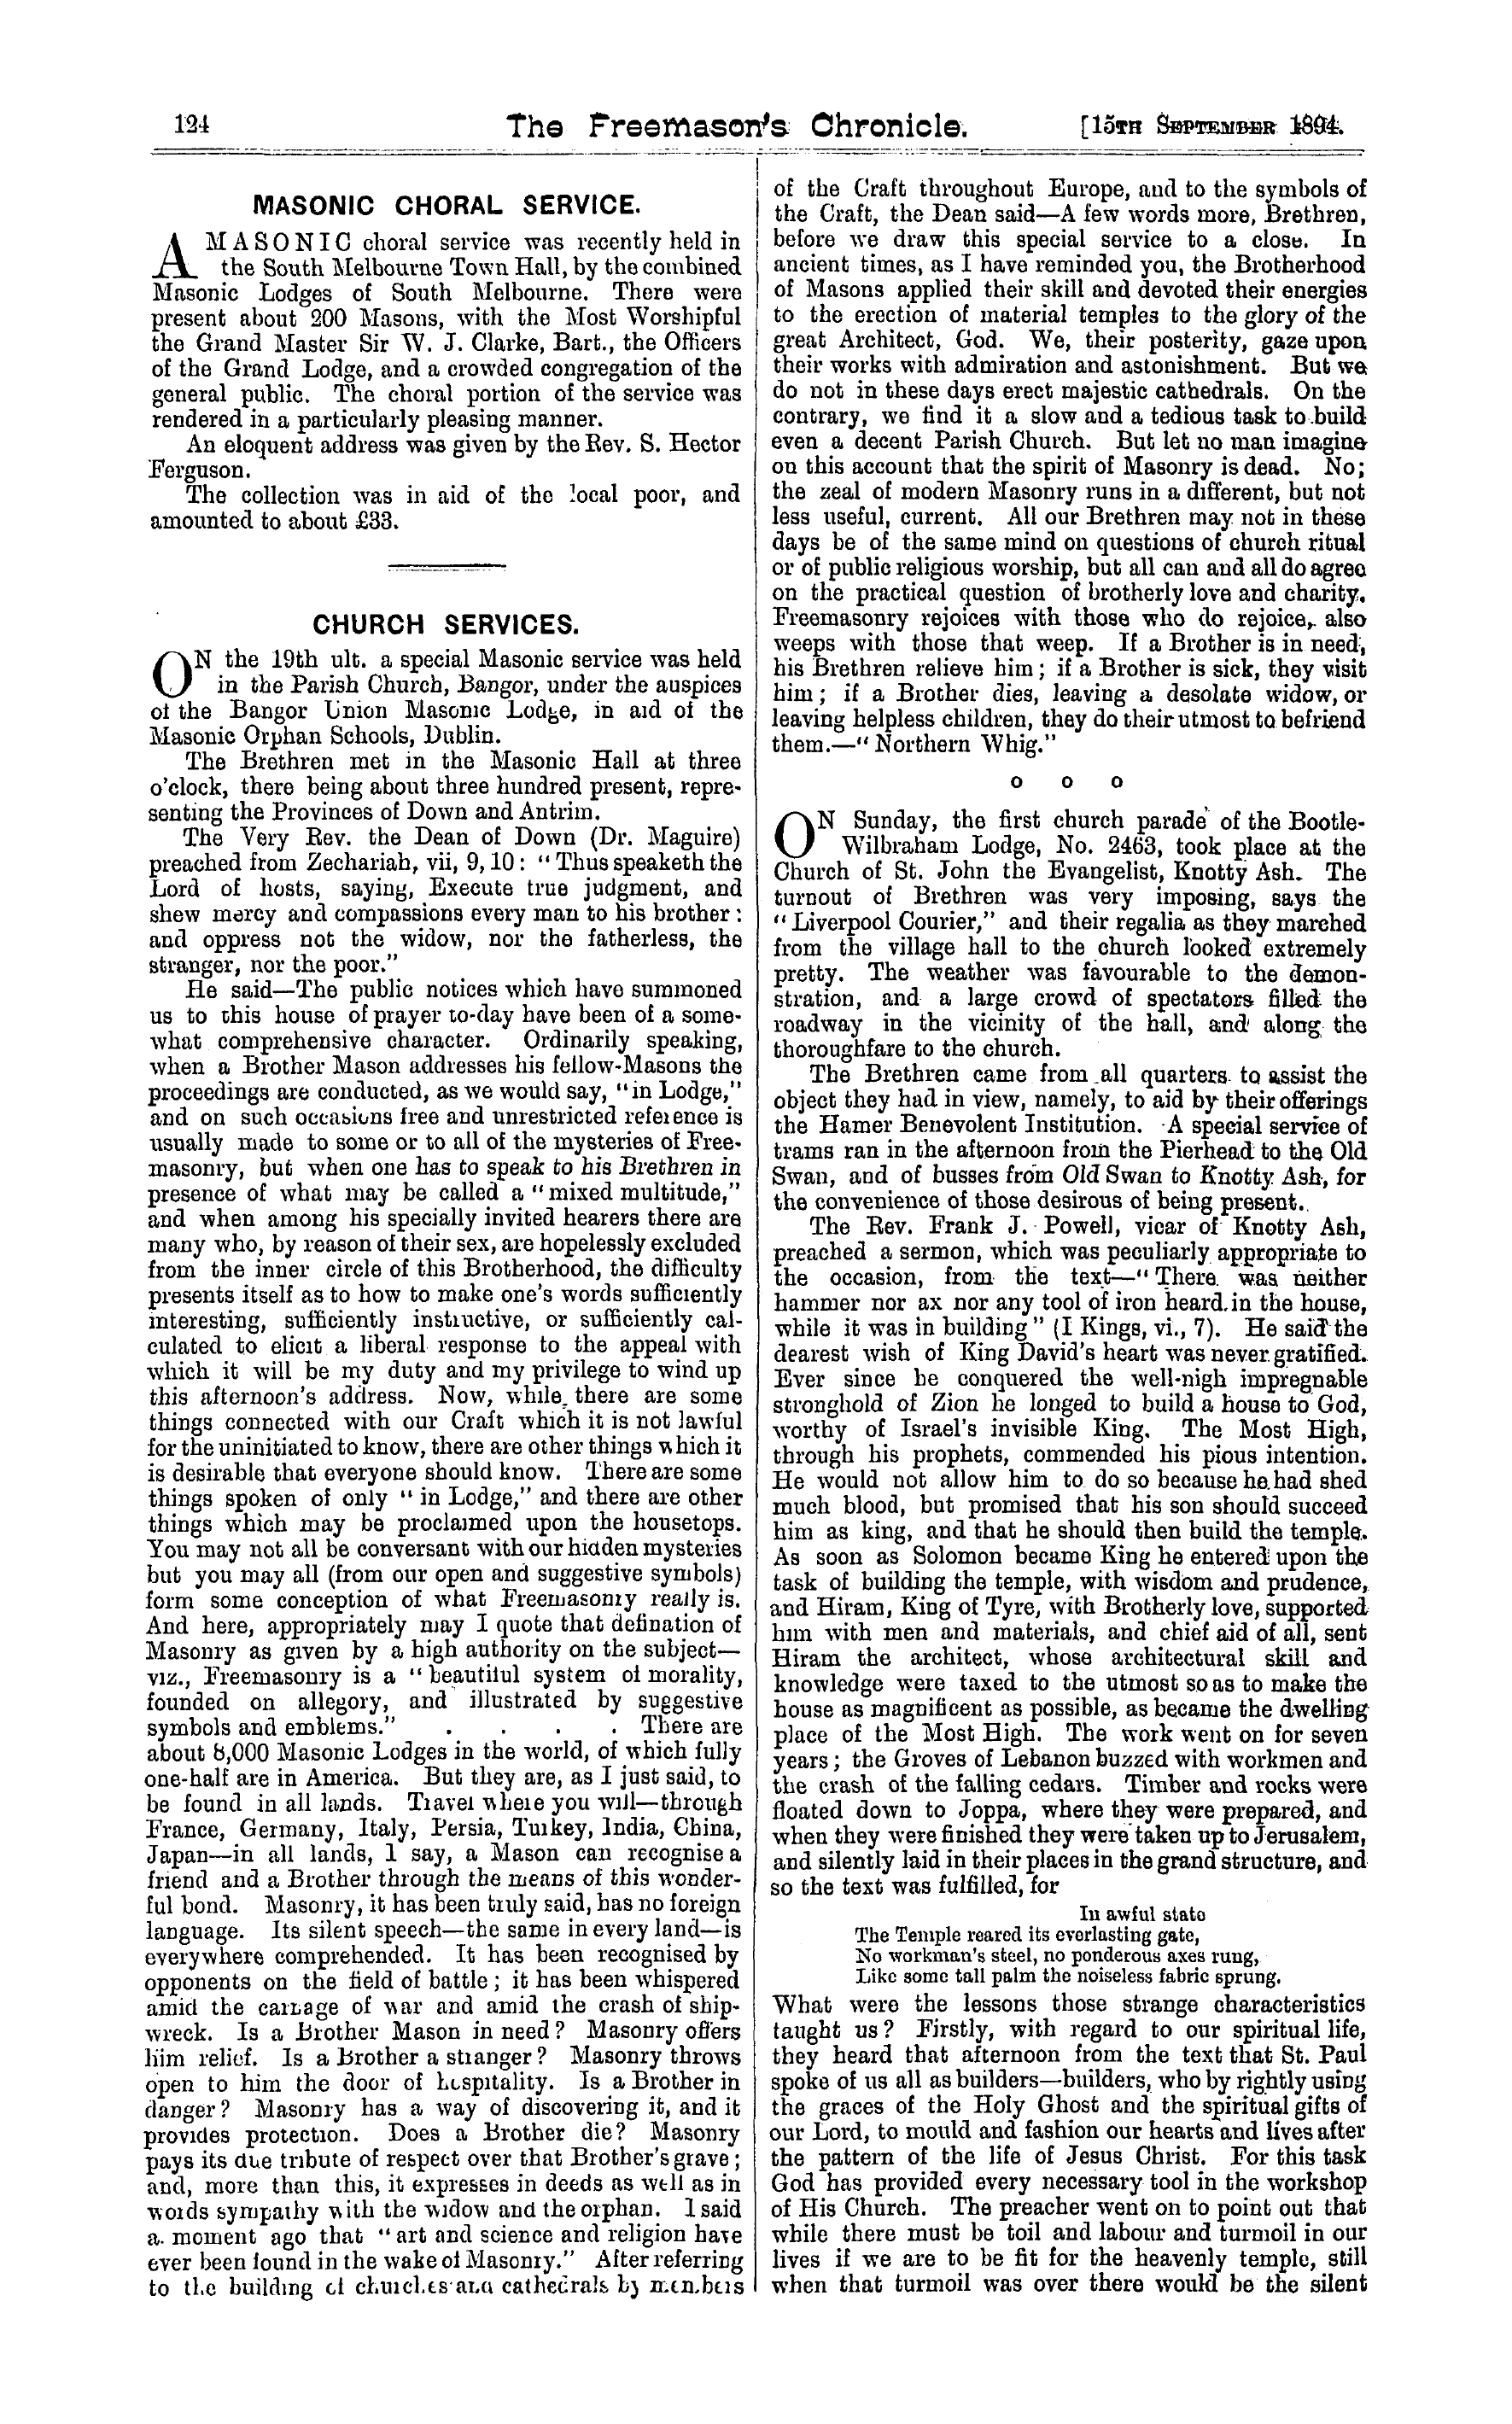 The Freemason's Chronicle: 1894-09-15 - Church Services.